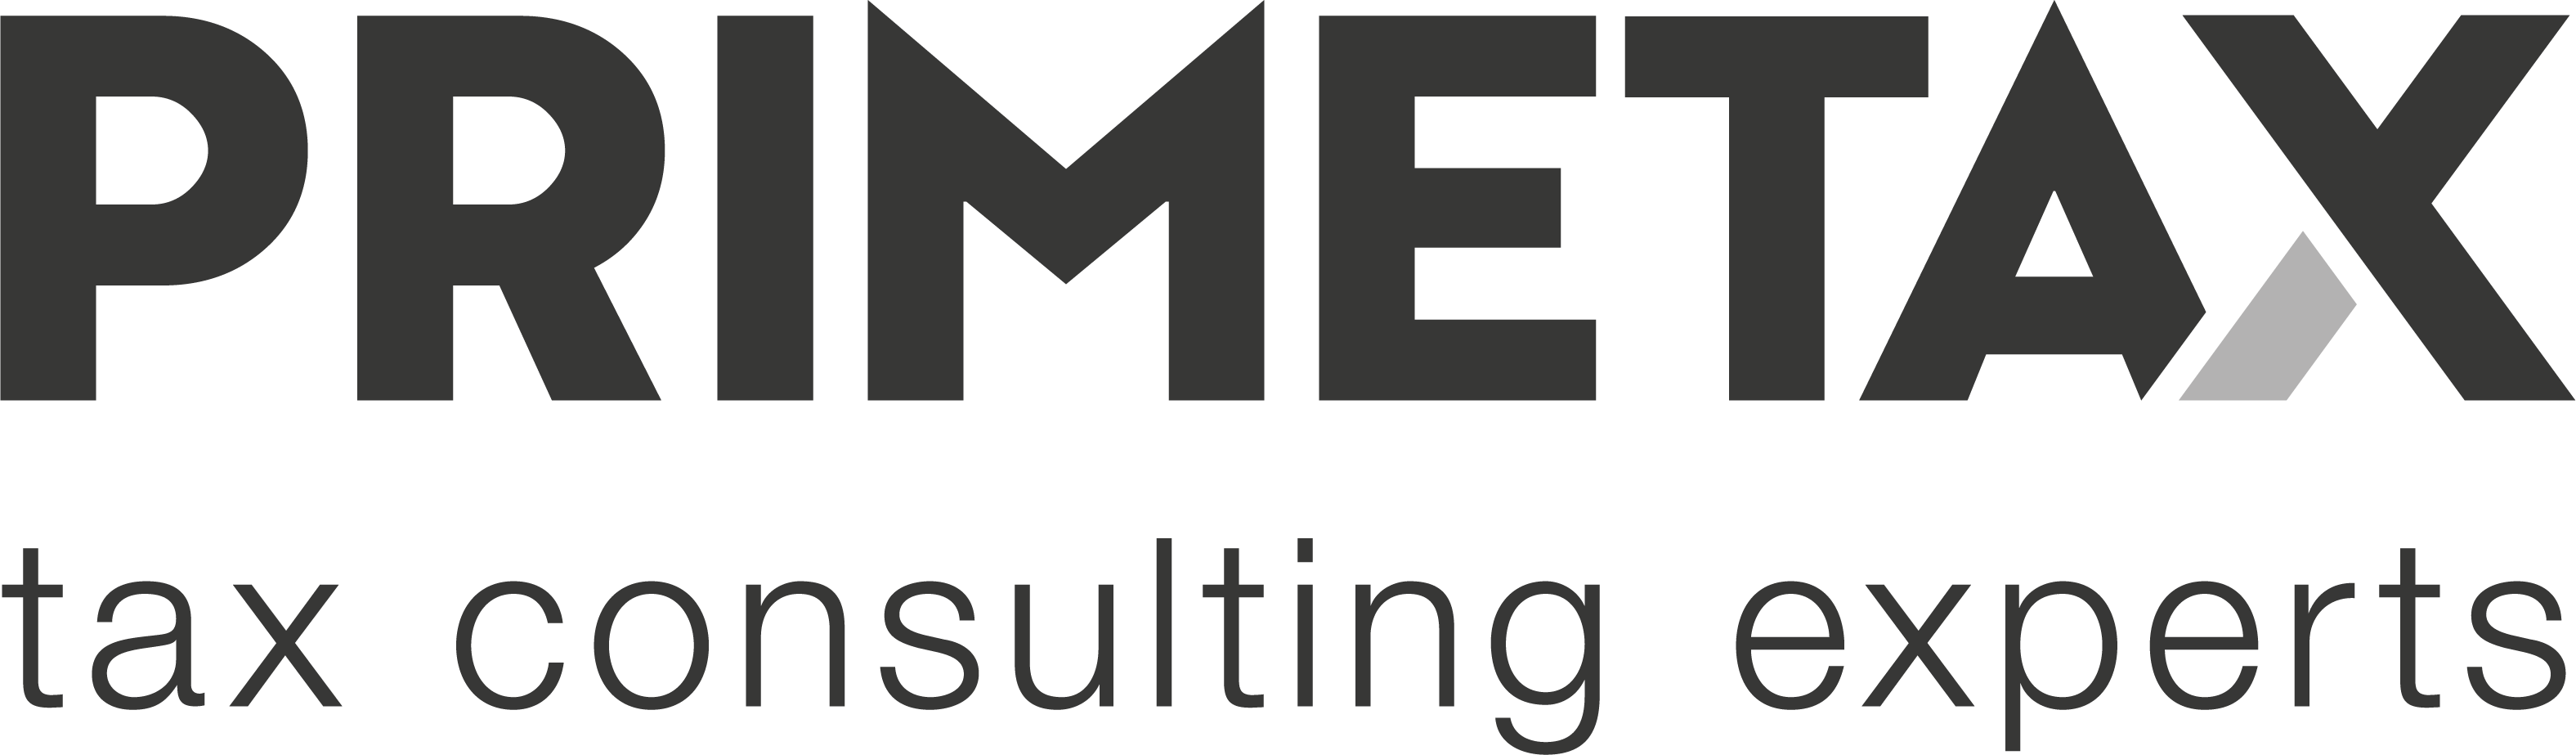 PrimeTax logo